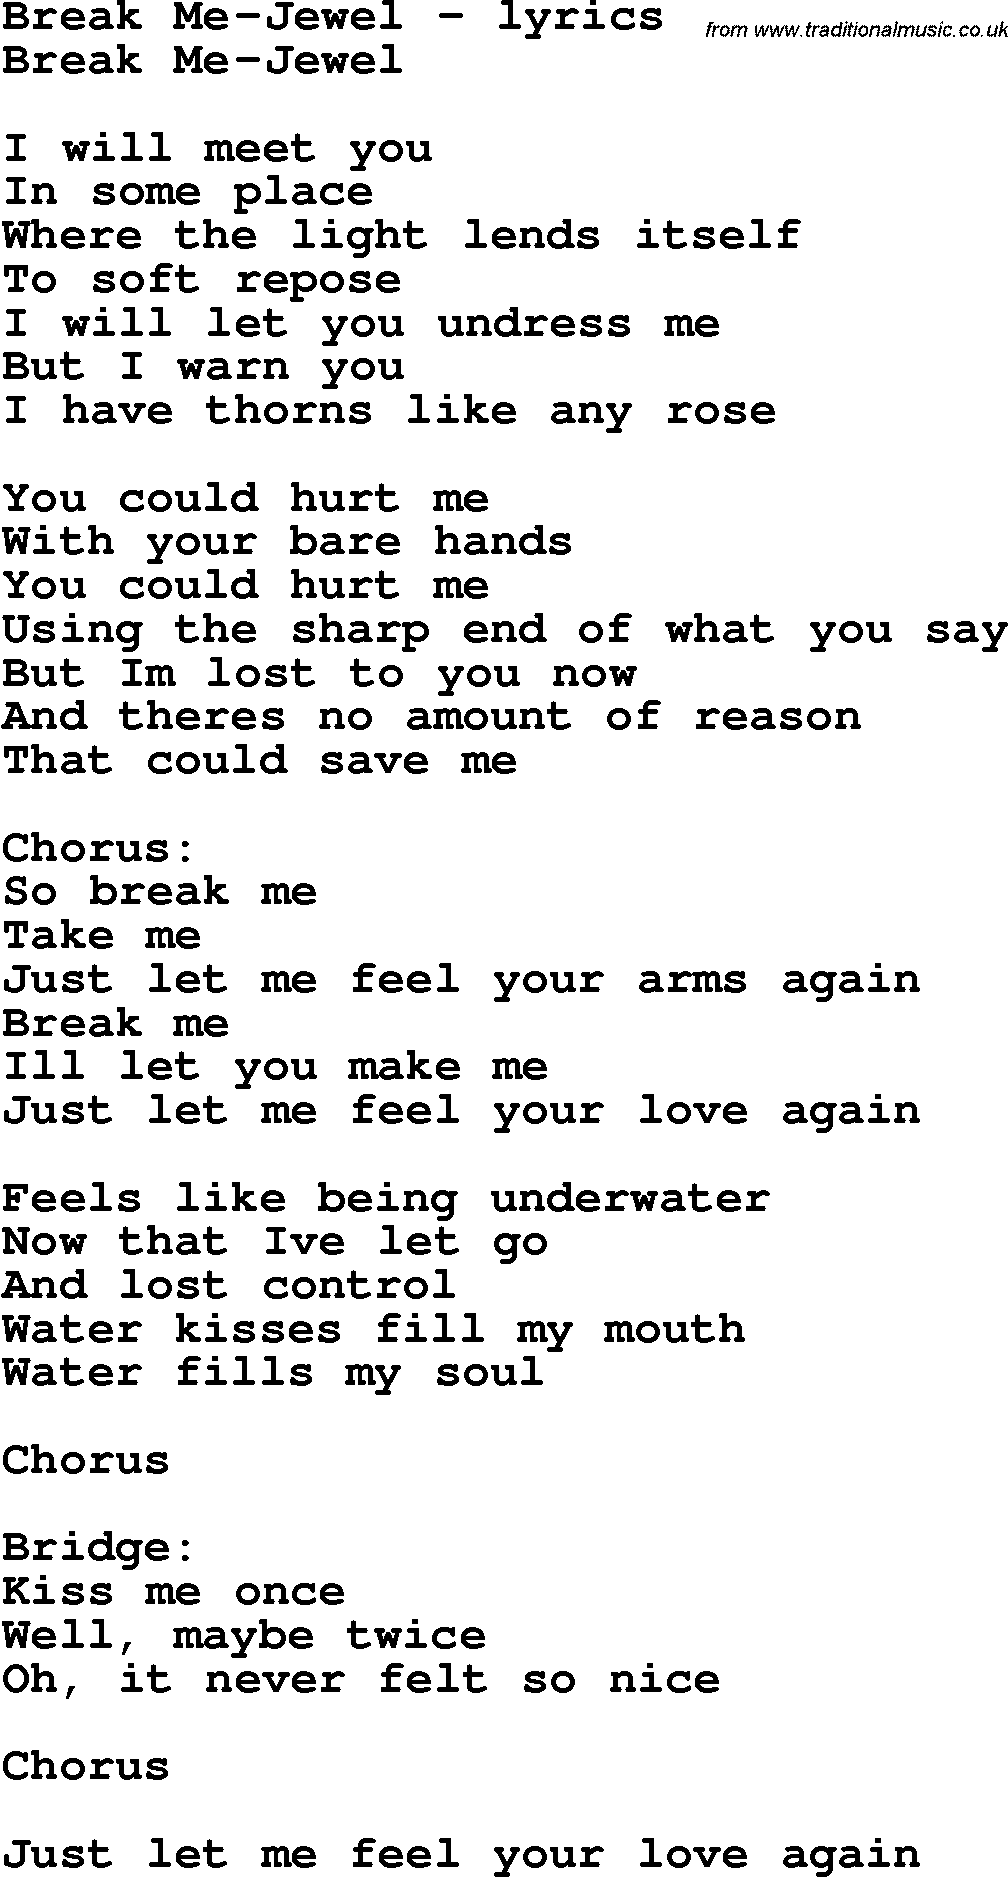 Love Song Lyrics for: Break Me-Jewel